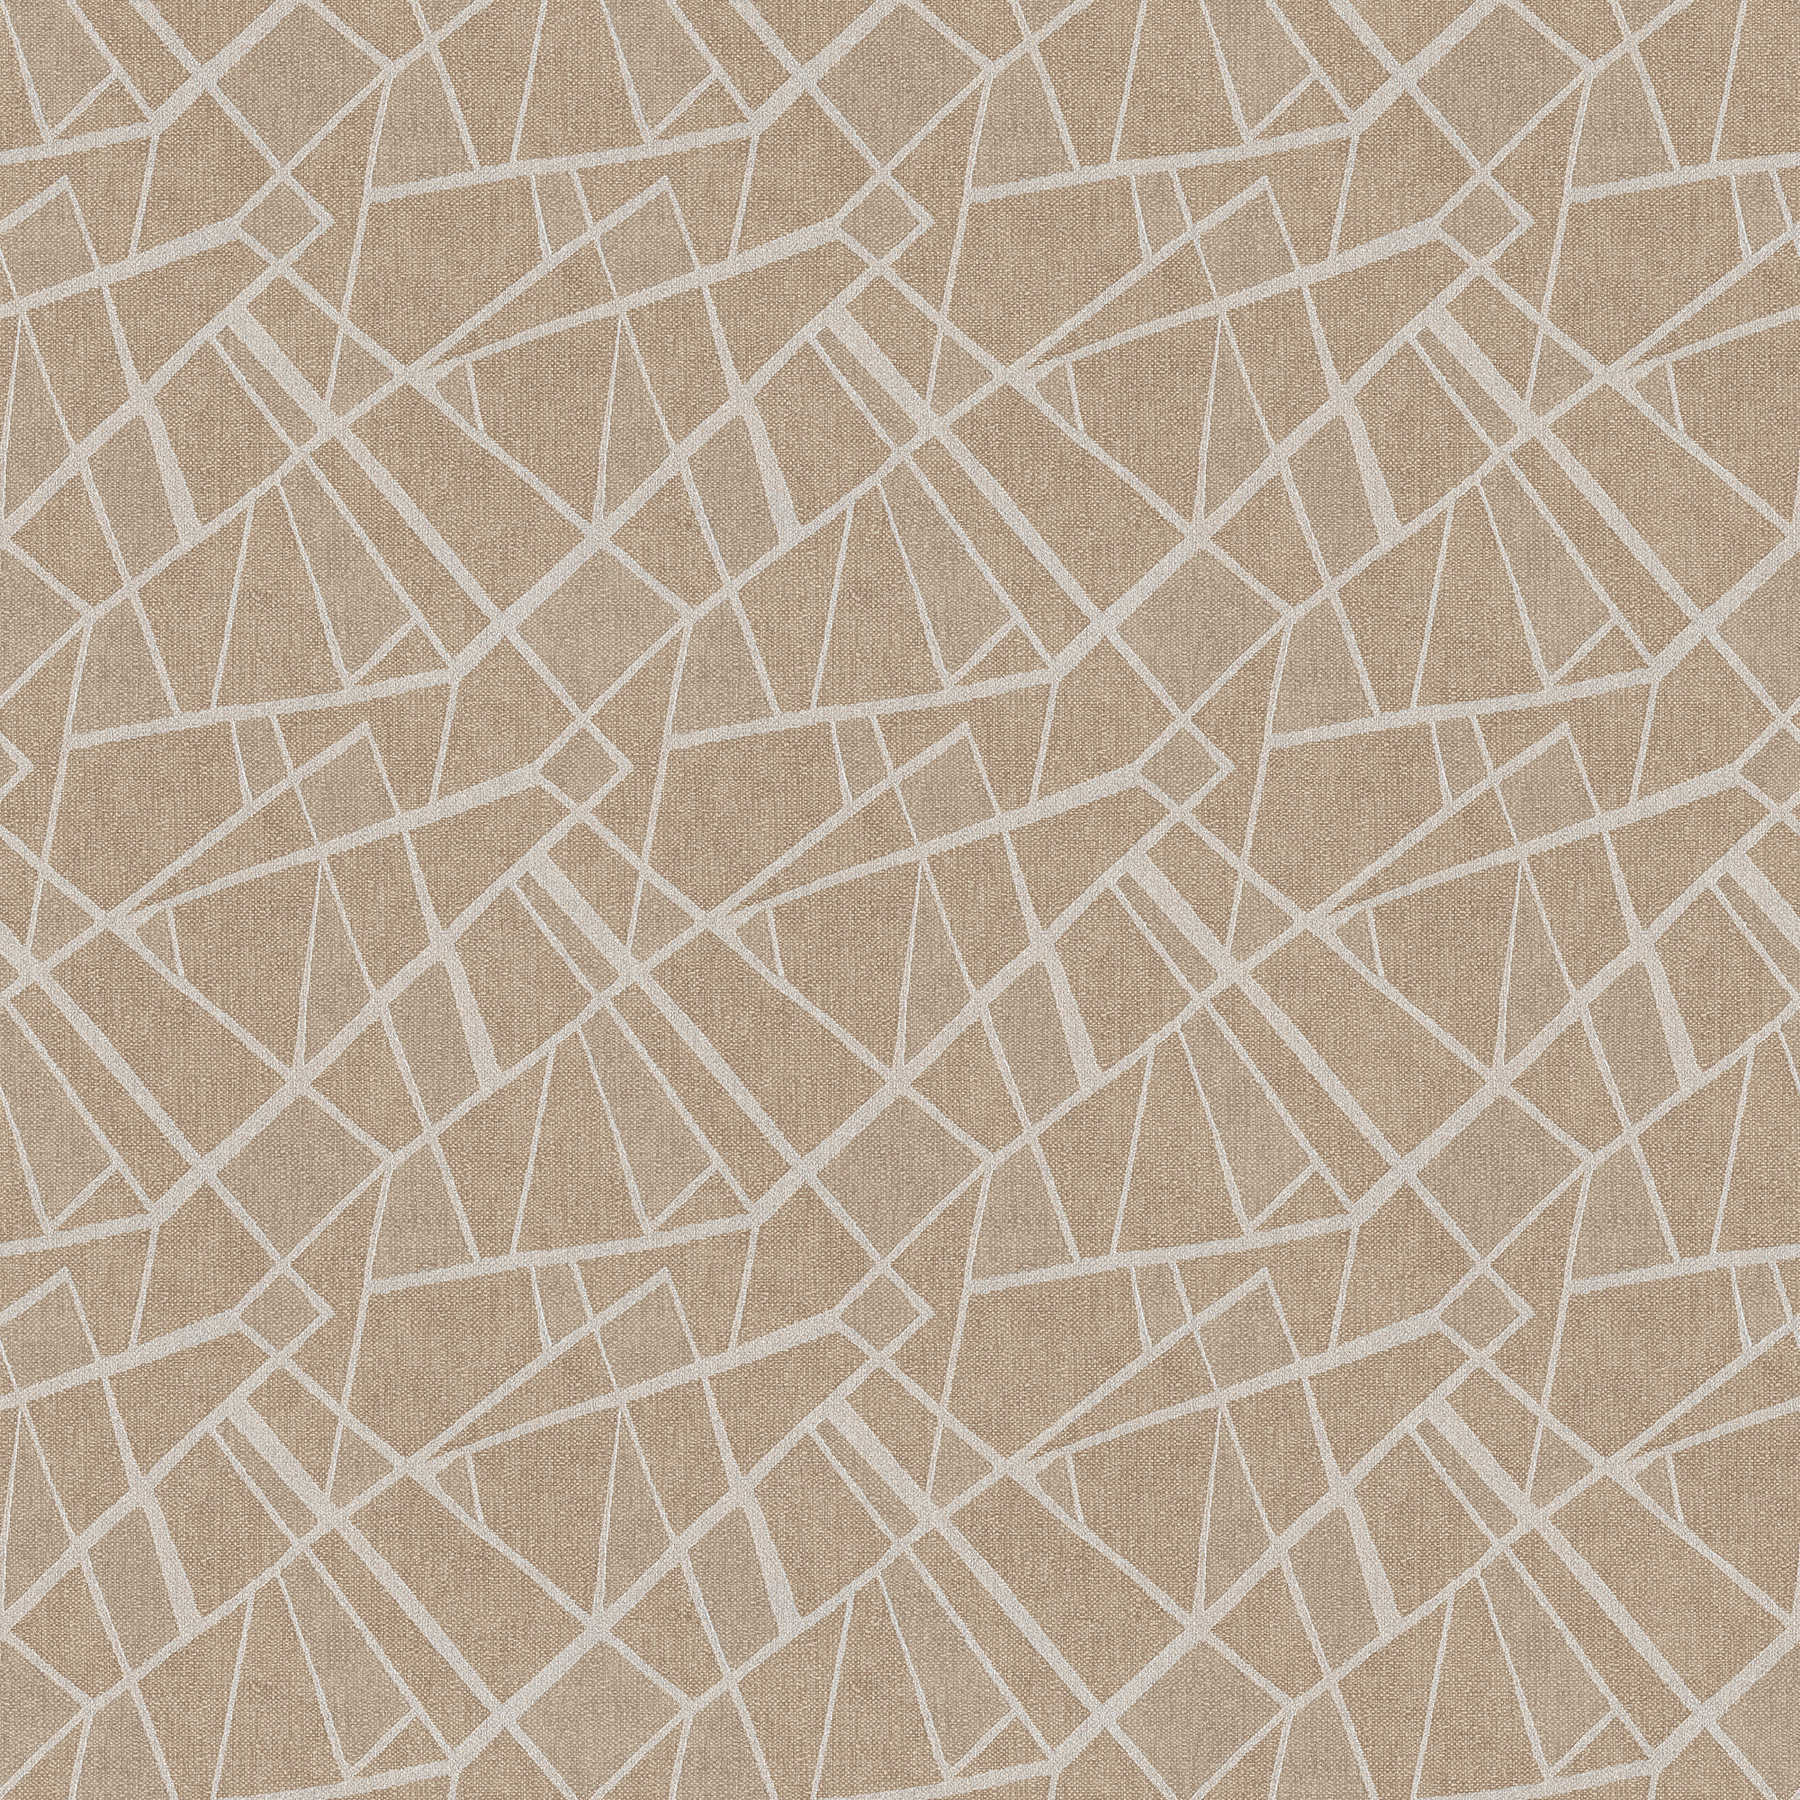 Wallpaper retro 50s line pattern with metallic effect - brown, metallic
